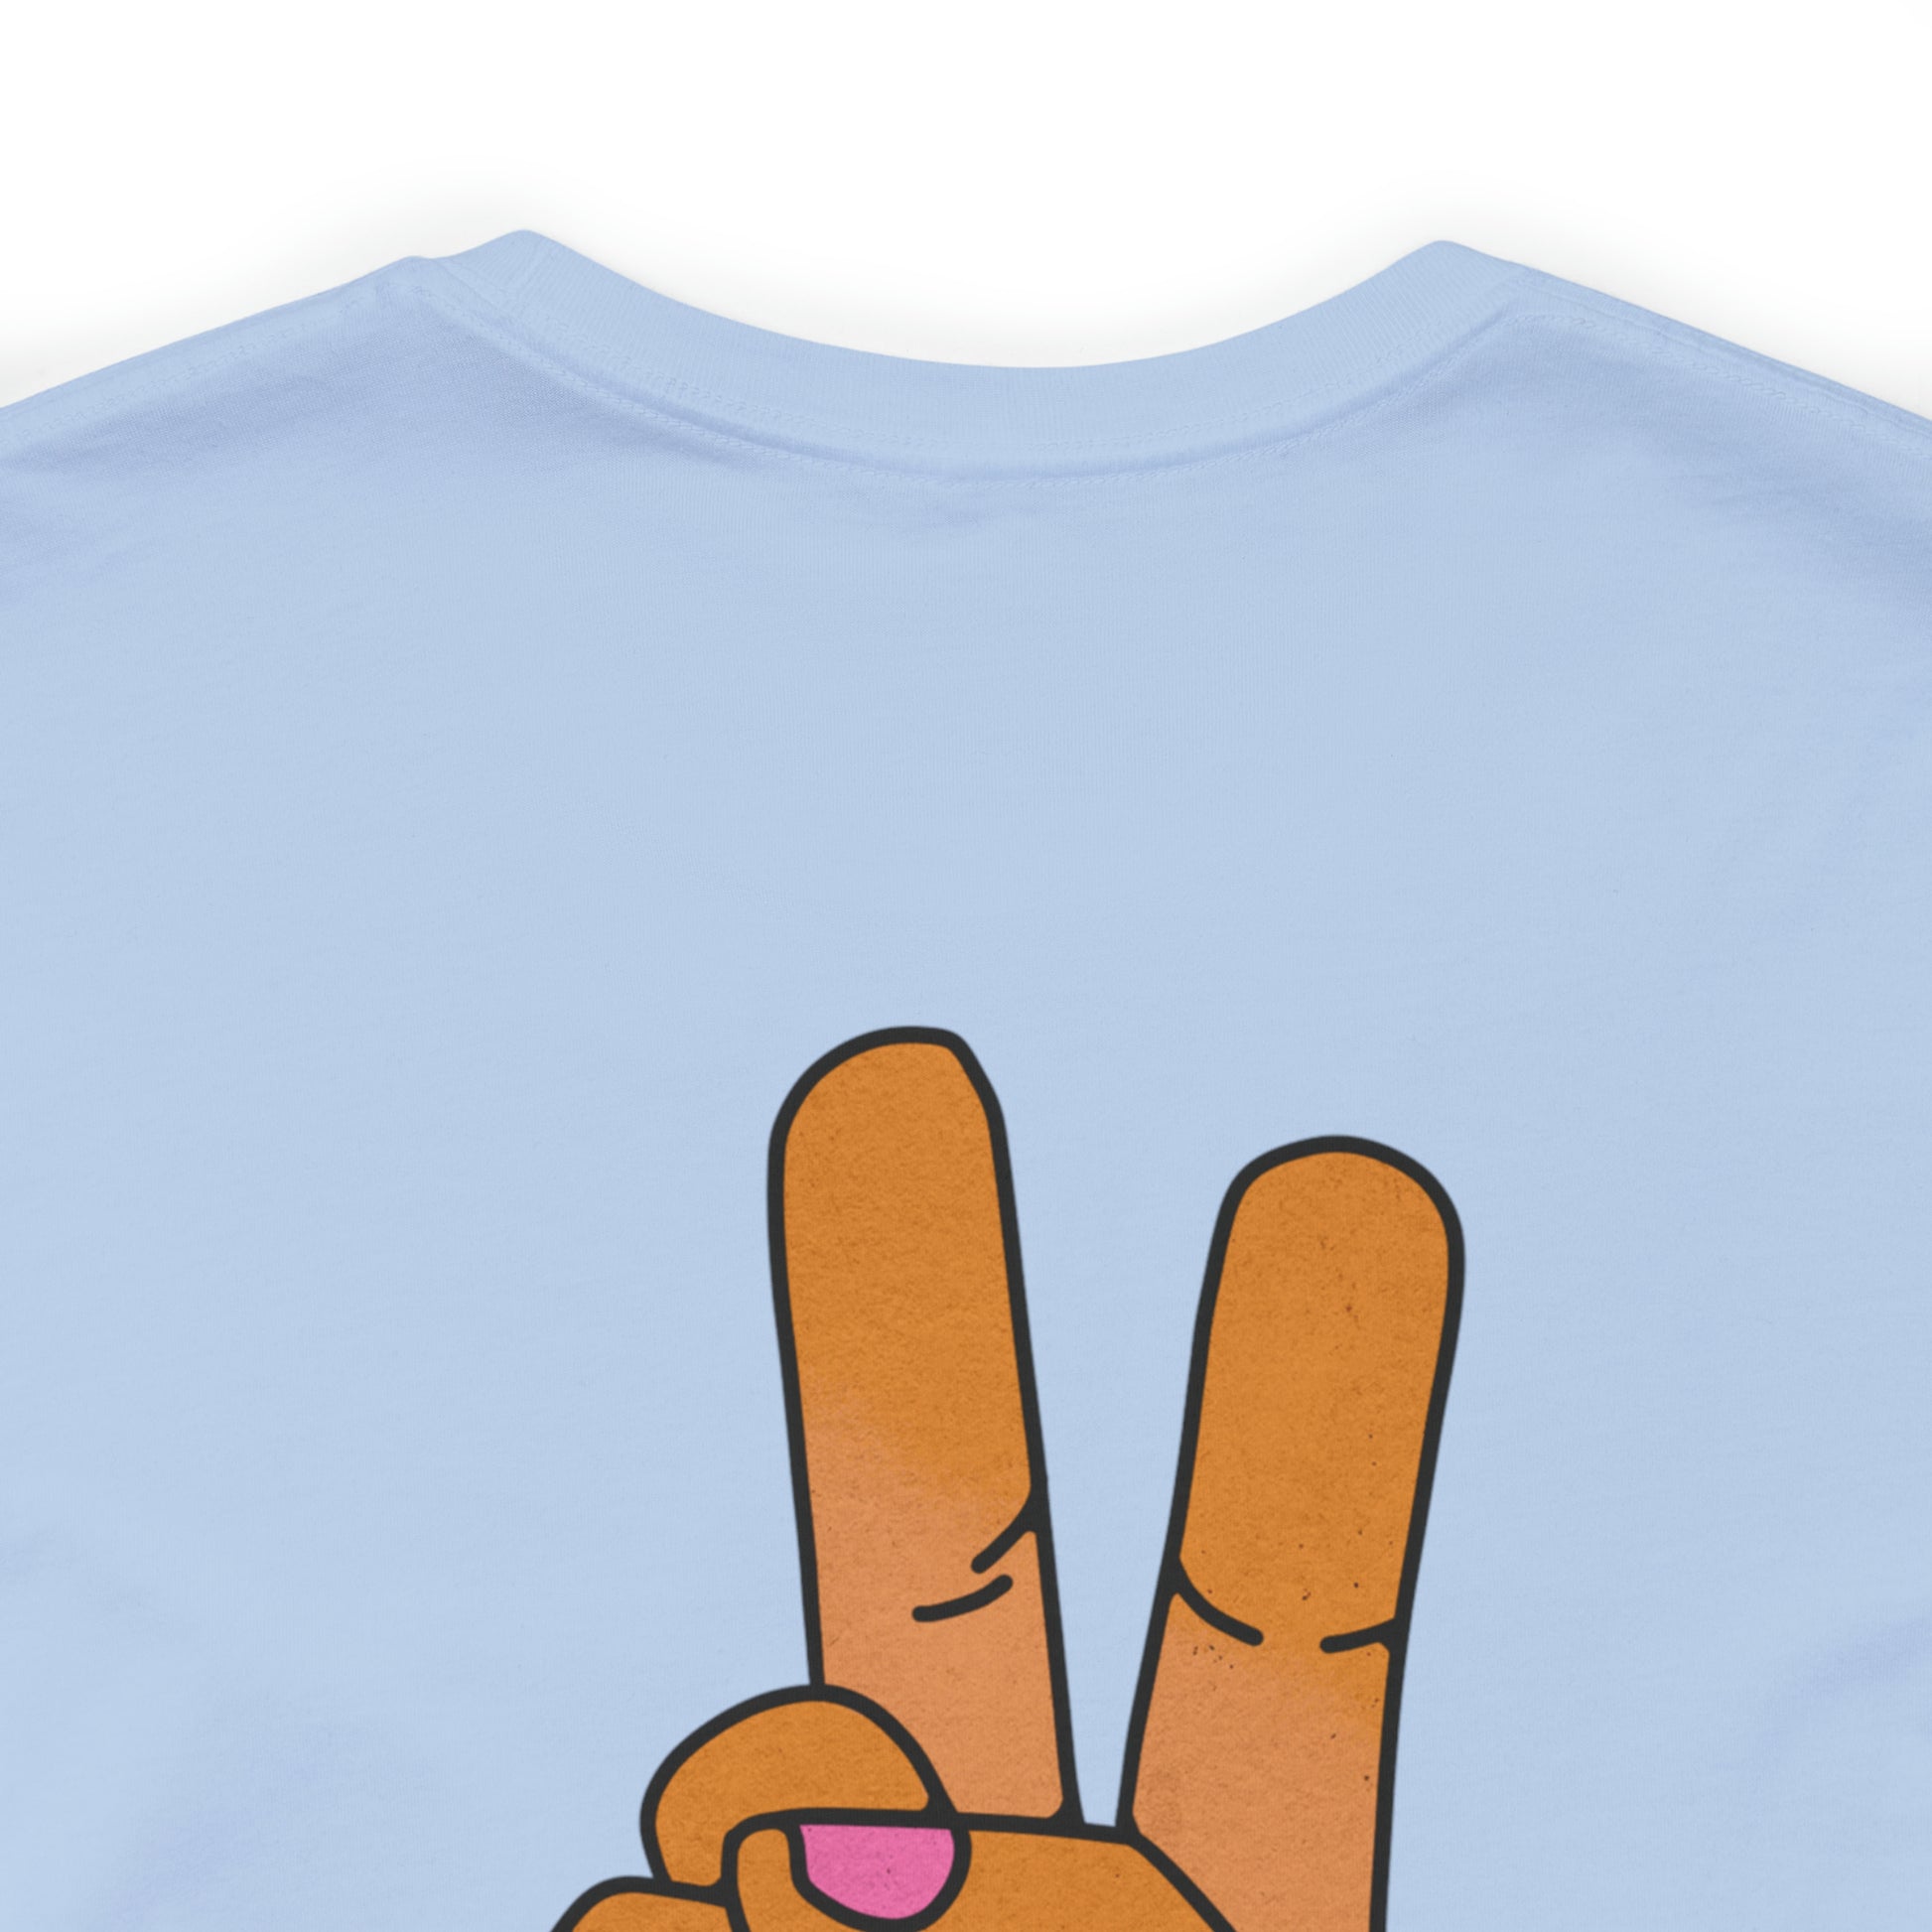 Unisex Adult Peace Shirt